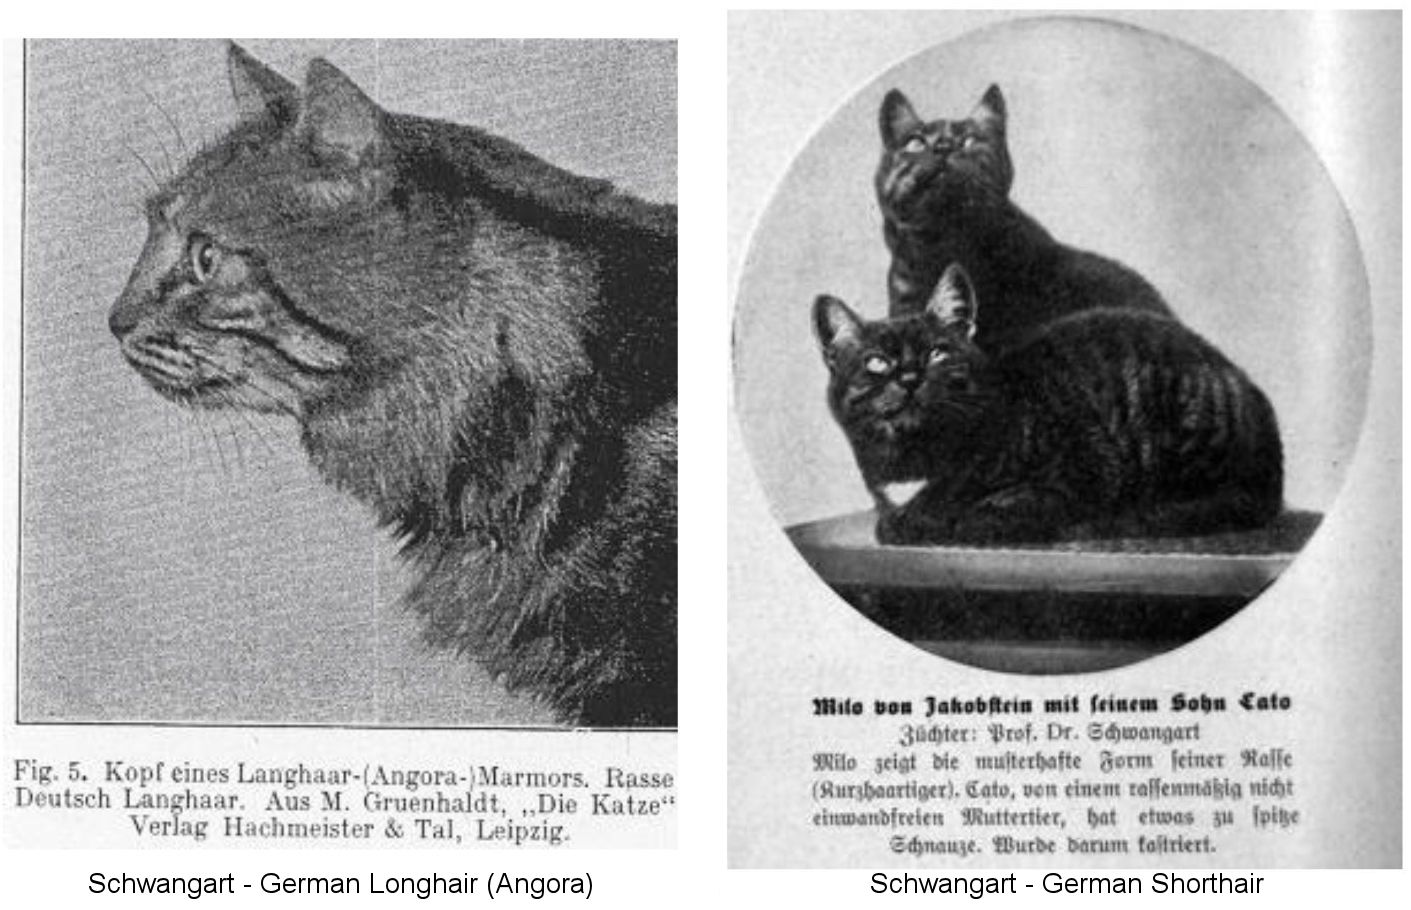 German longhair and shorthair cats